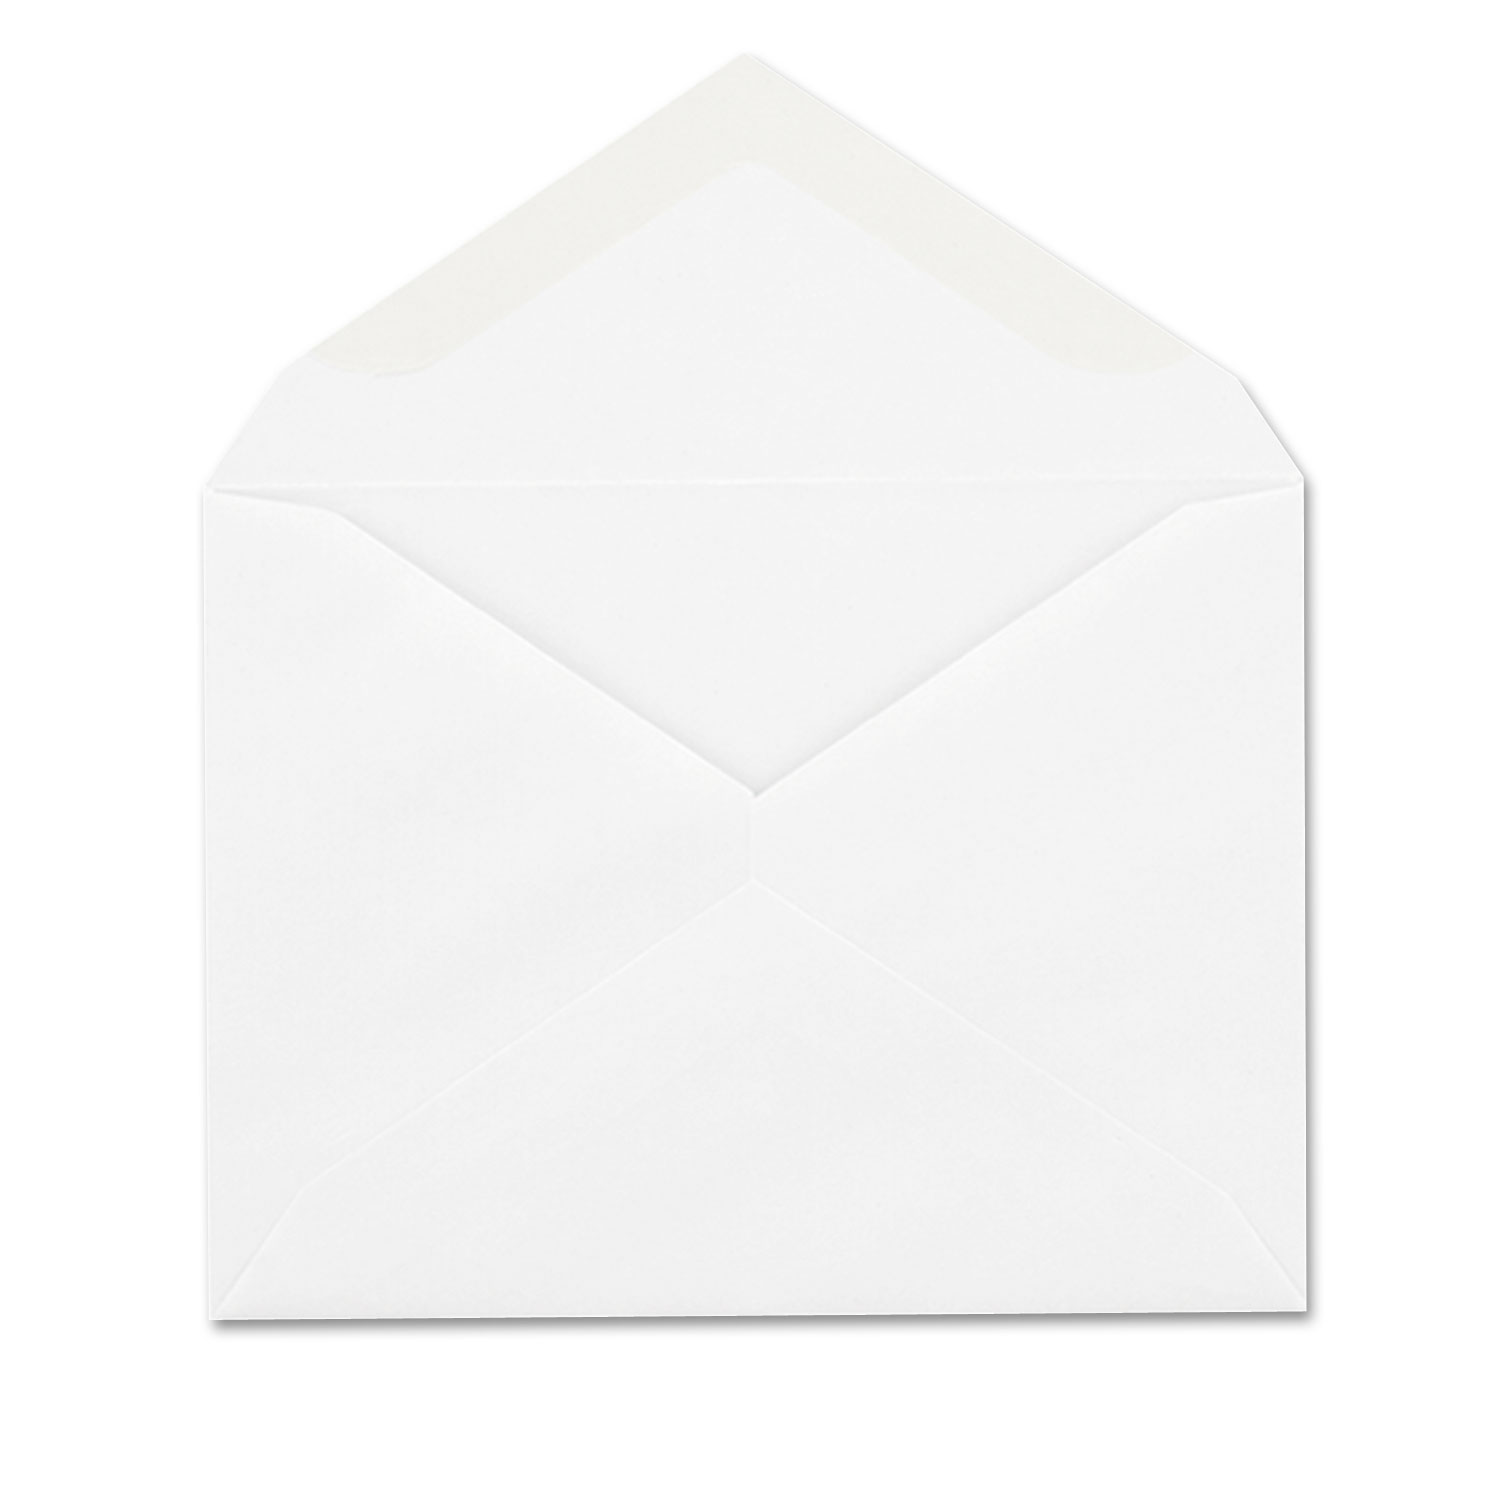  Columbian COLO198 Invitation & Greeting Card Envelope, 5 1/2 Bar, Pointed Baronial Flap, Gummed Closure, 4.38 x 5.75, White, 100/Box (QUACO198) 